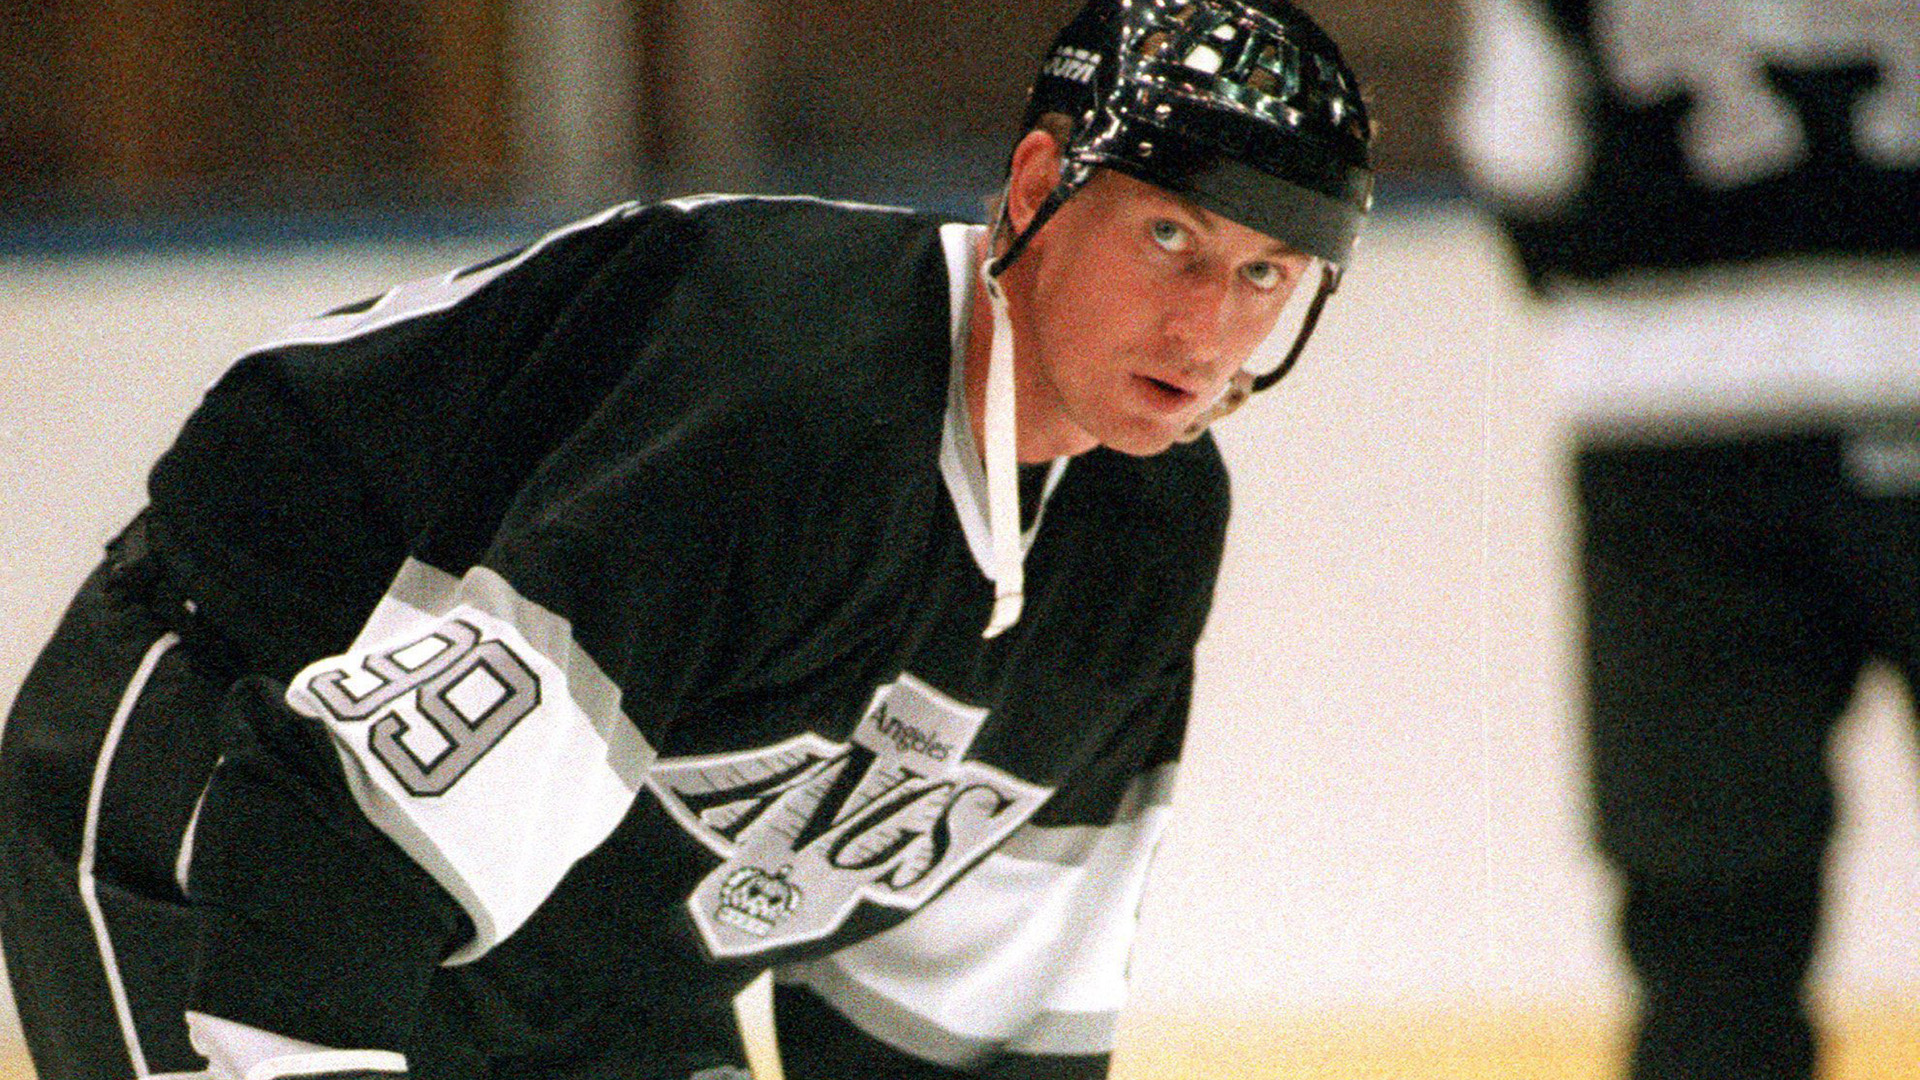 Wayne Gretzky of the Los Angeles Kings skates against the Toronto